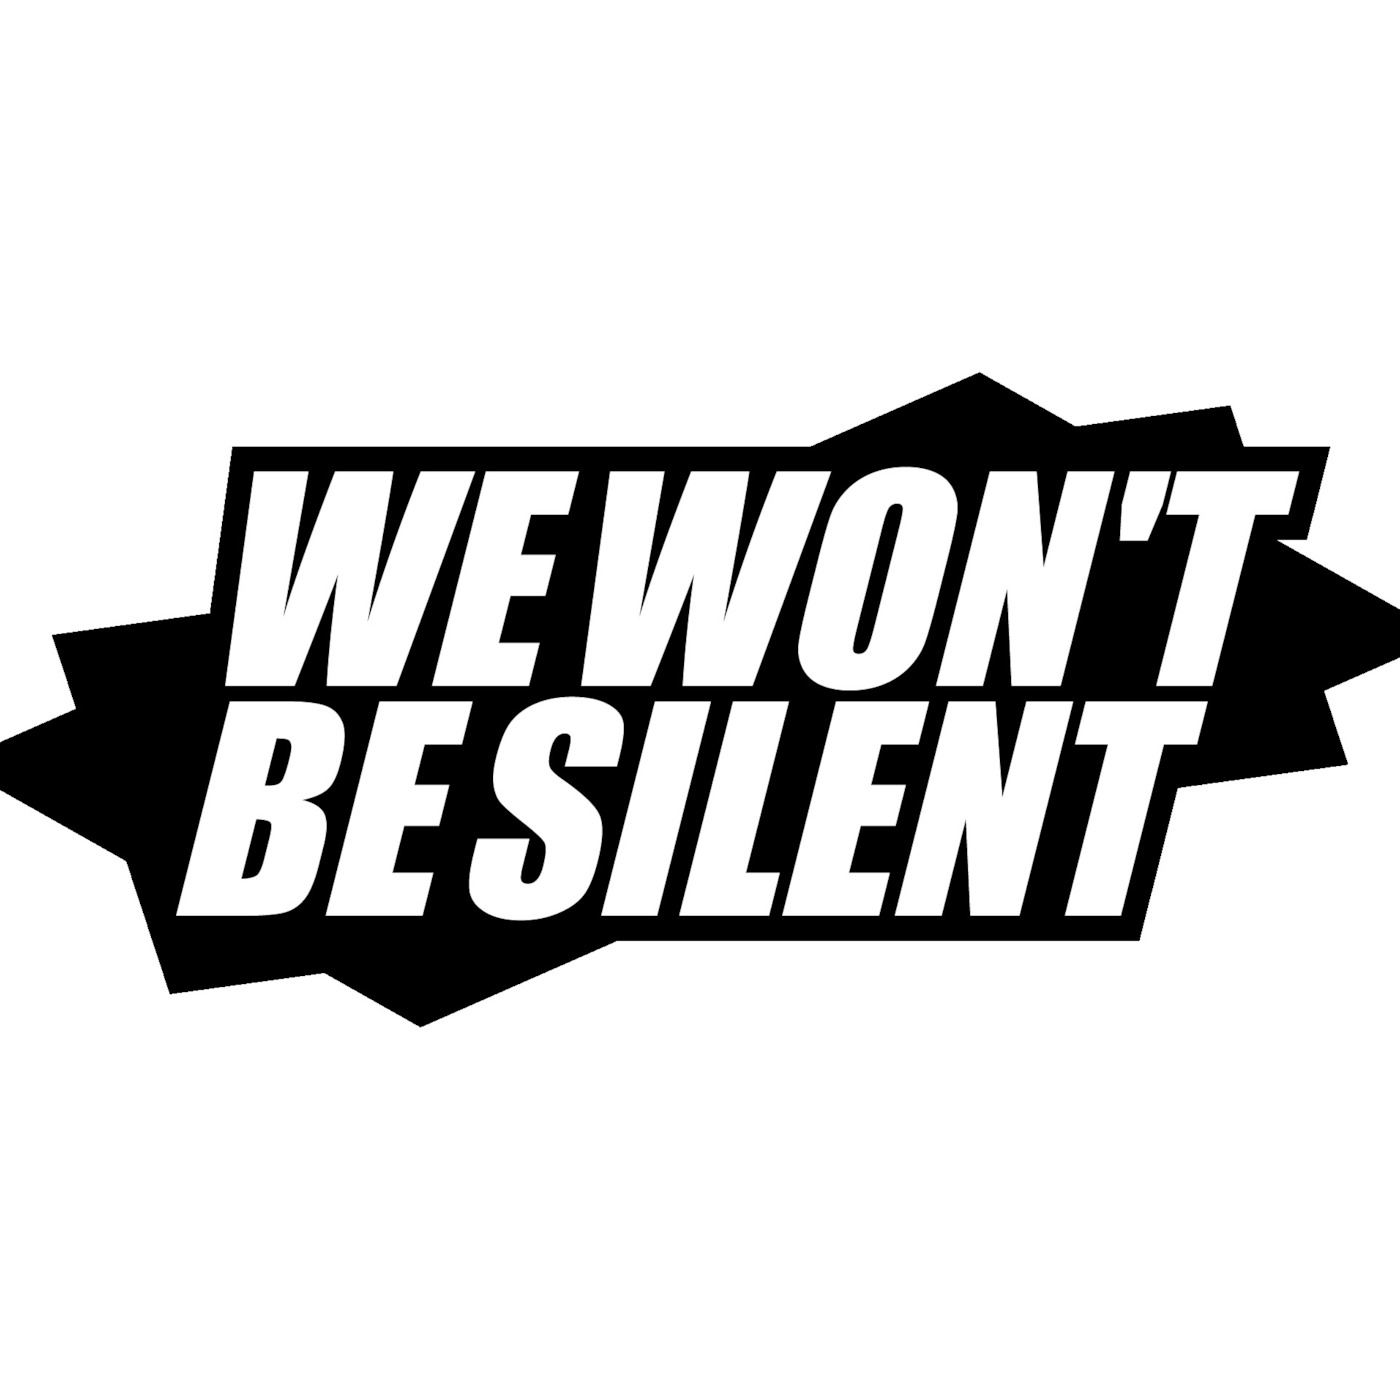 We Won't Be Silent